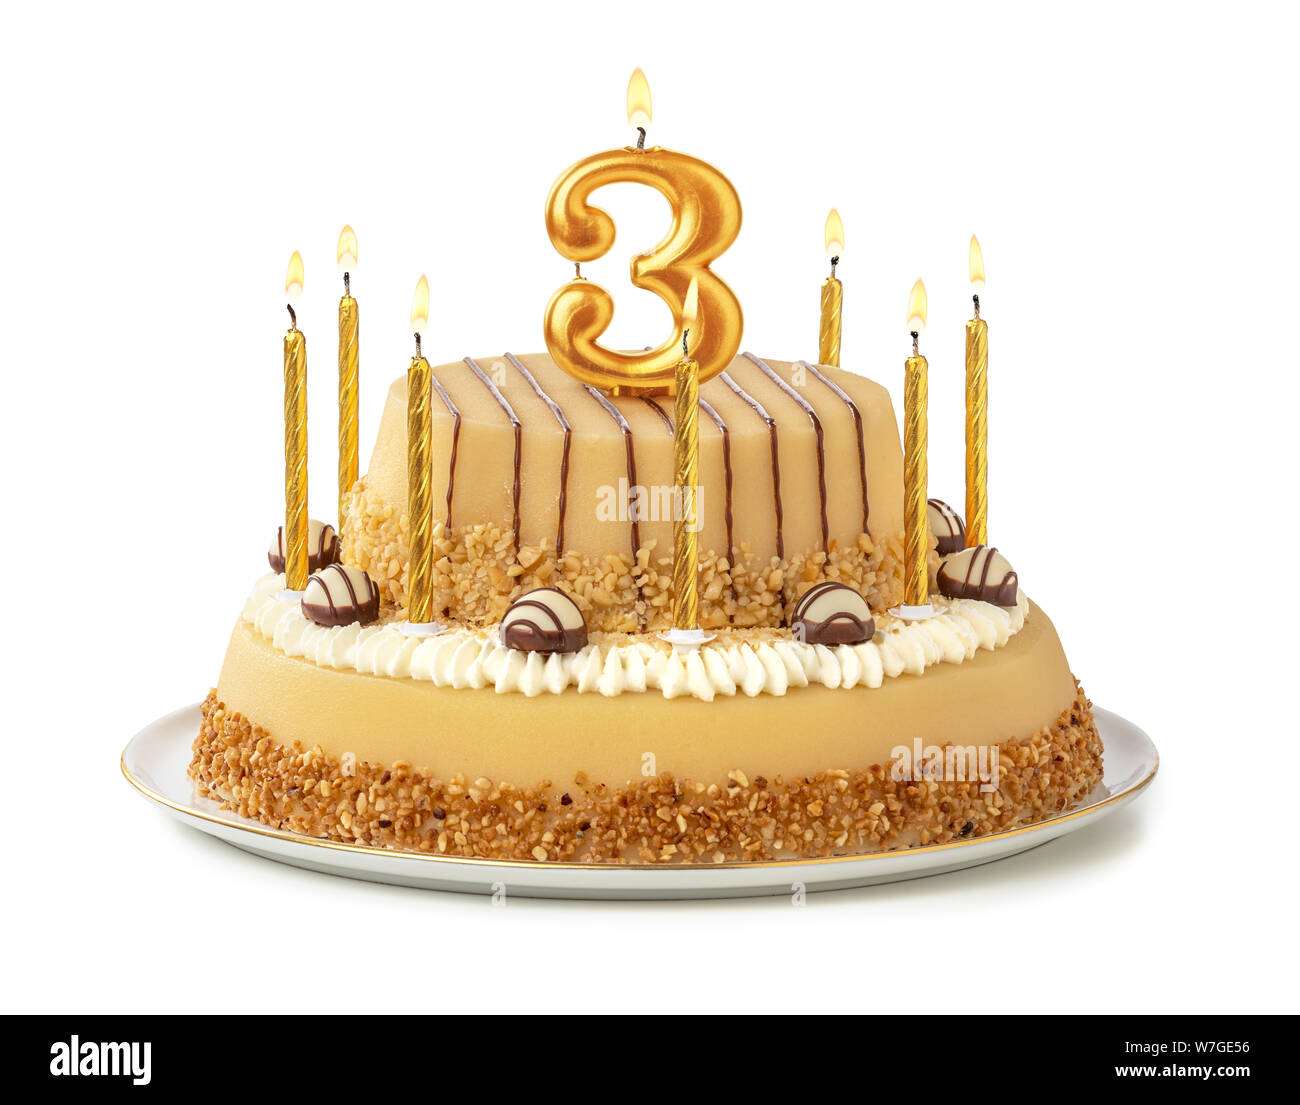 Festliche Kuchen mit goldenen Kerzen - Zahl 3 Stockfoto